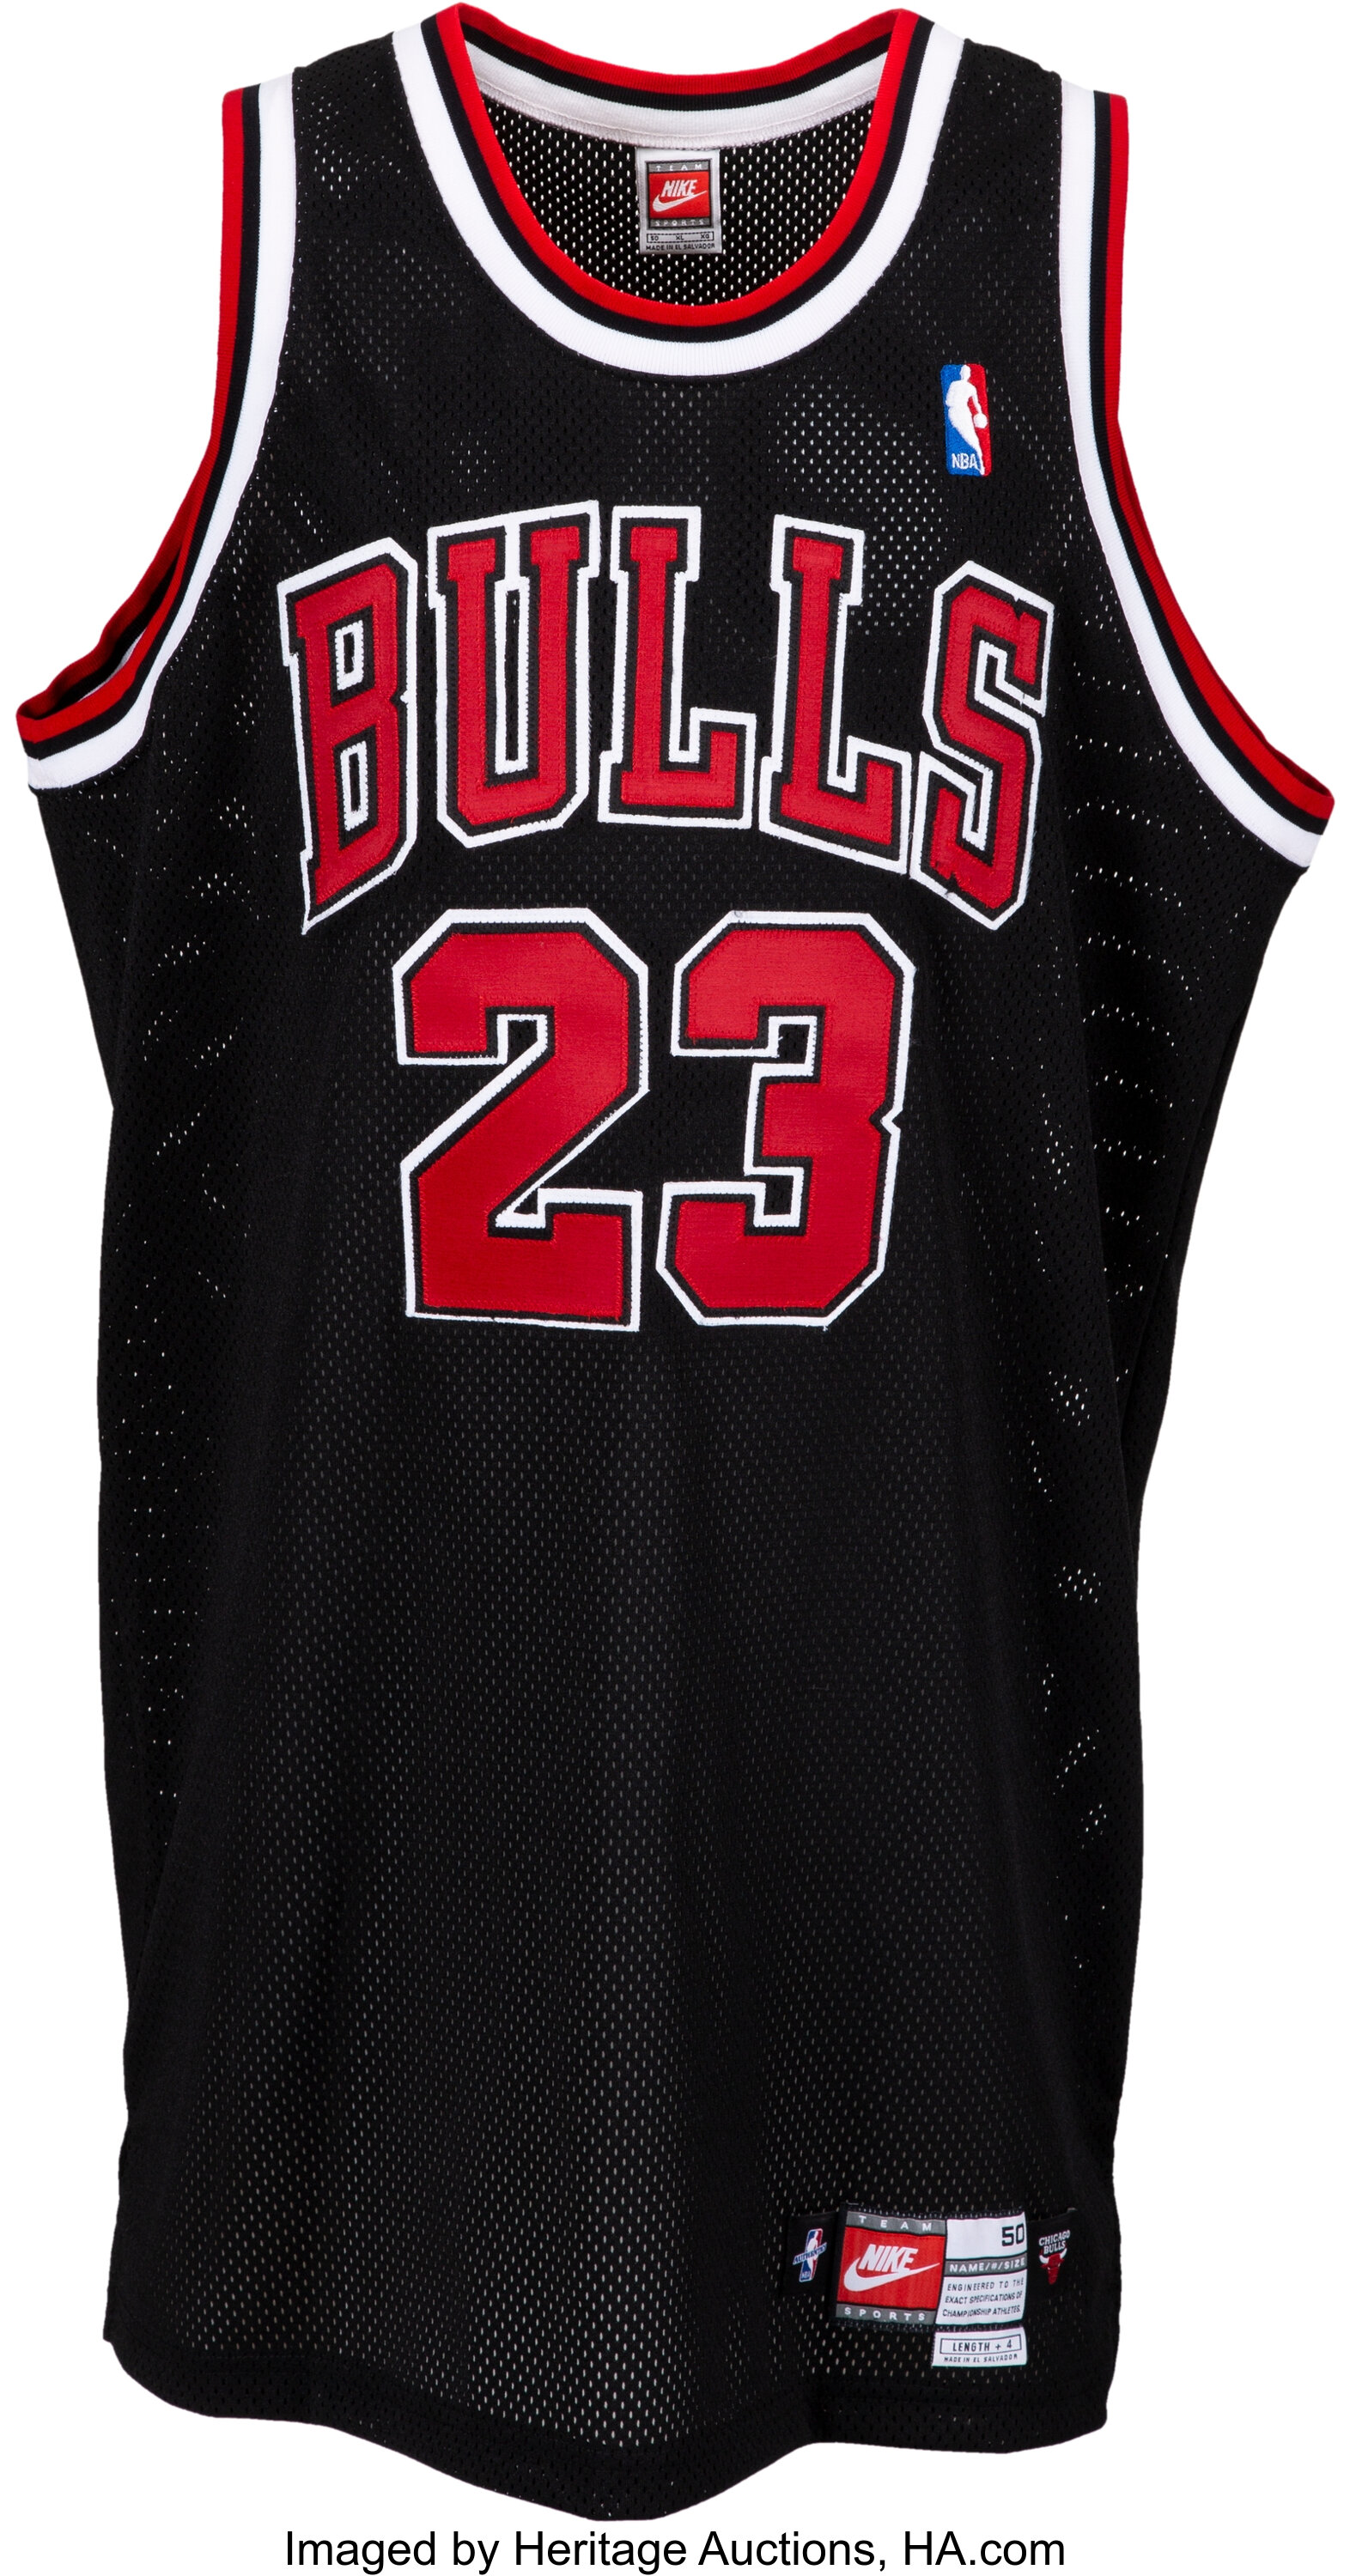 1990's Michael Jordan Signed Chicago Bulls Jersey - Upper Deck, Lot #58494